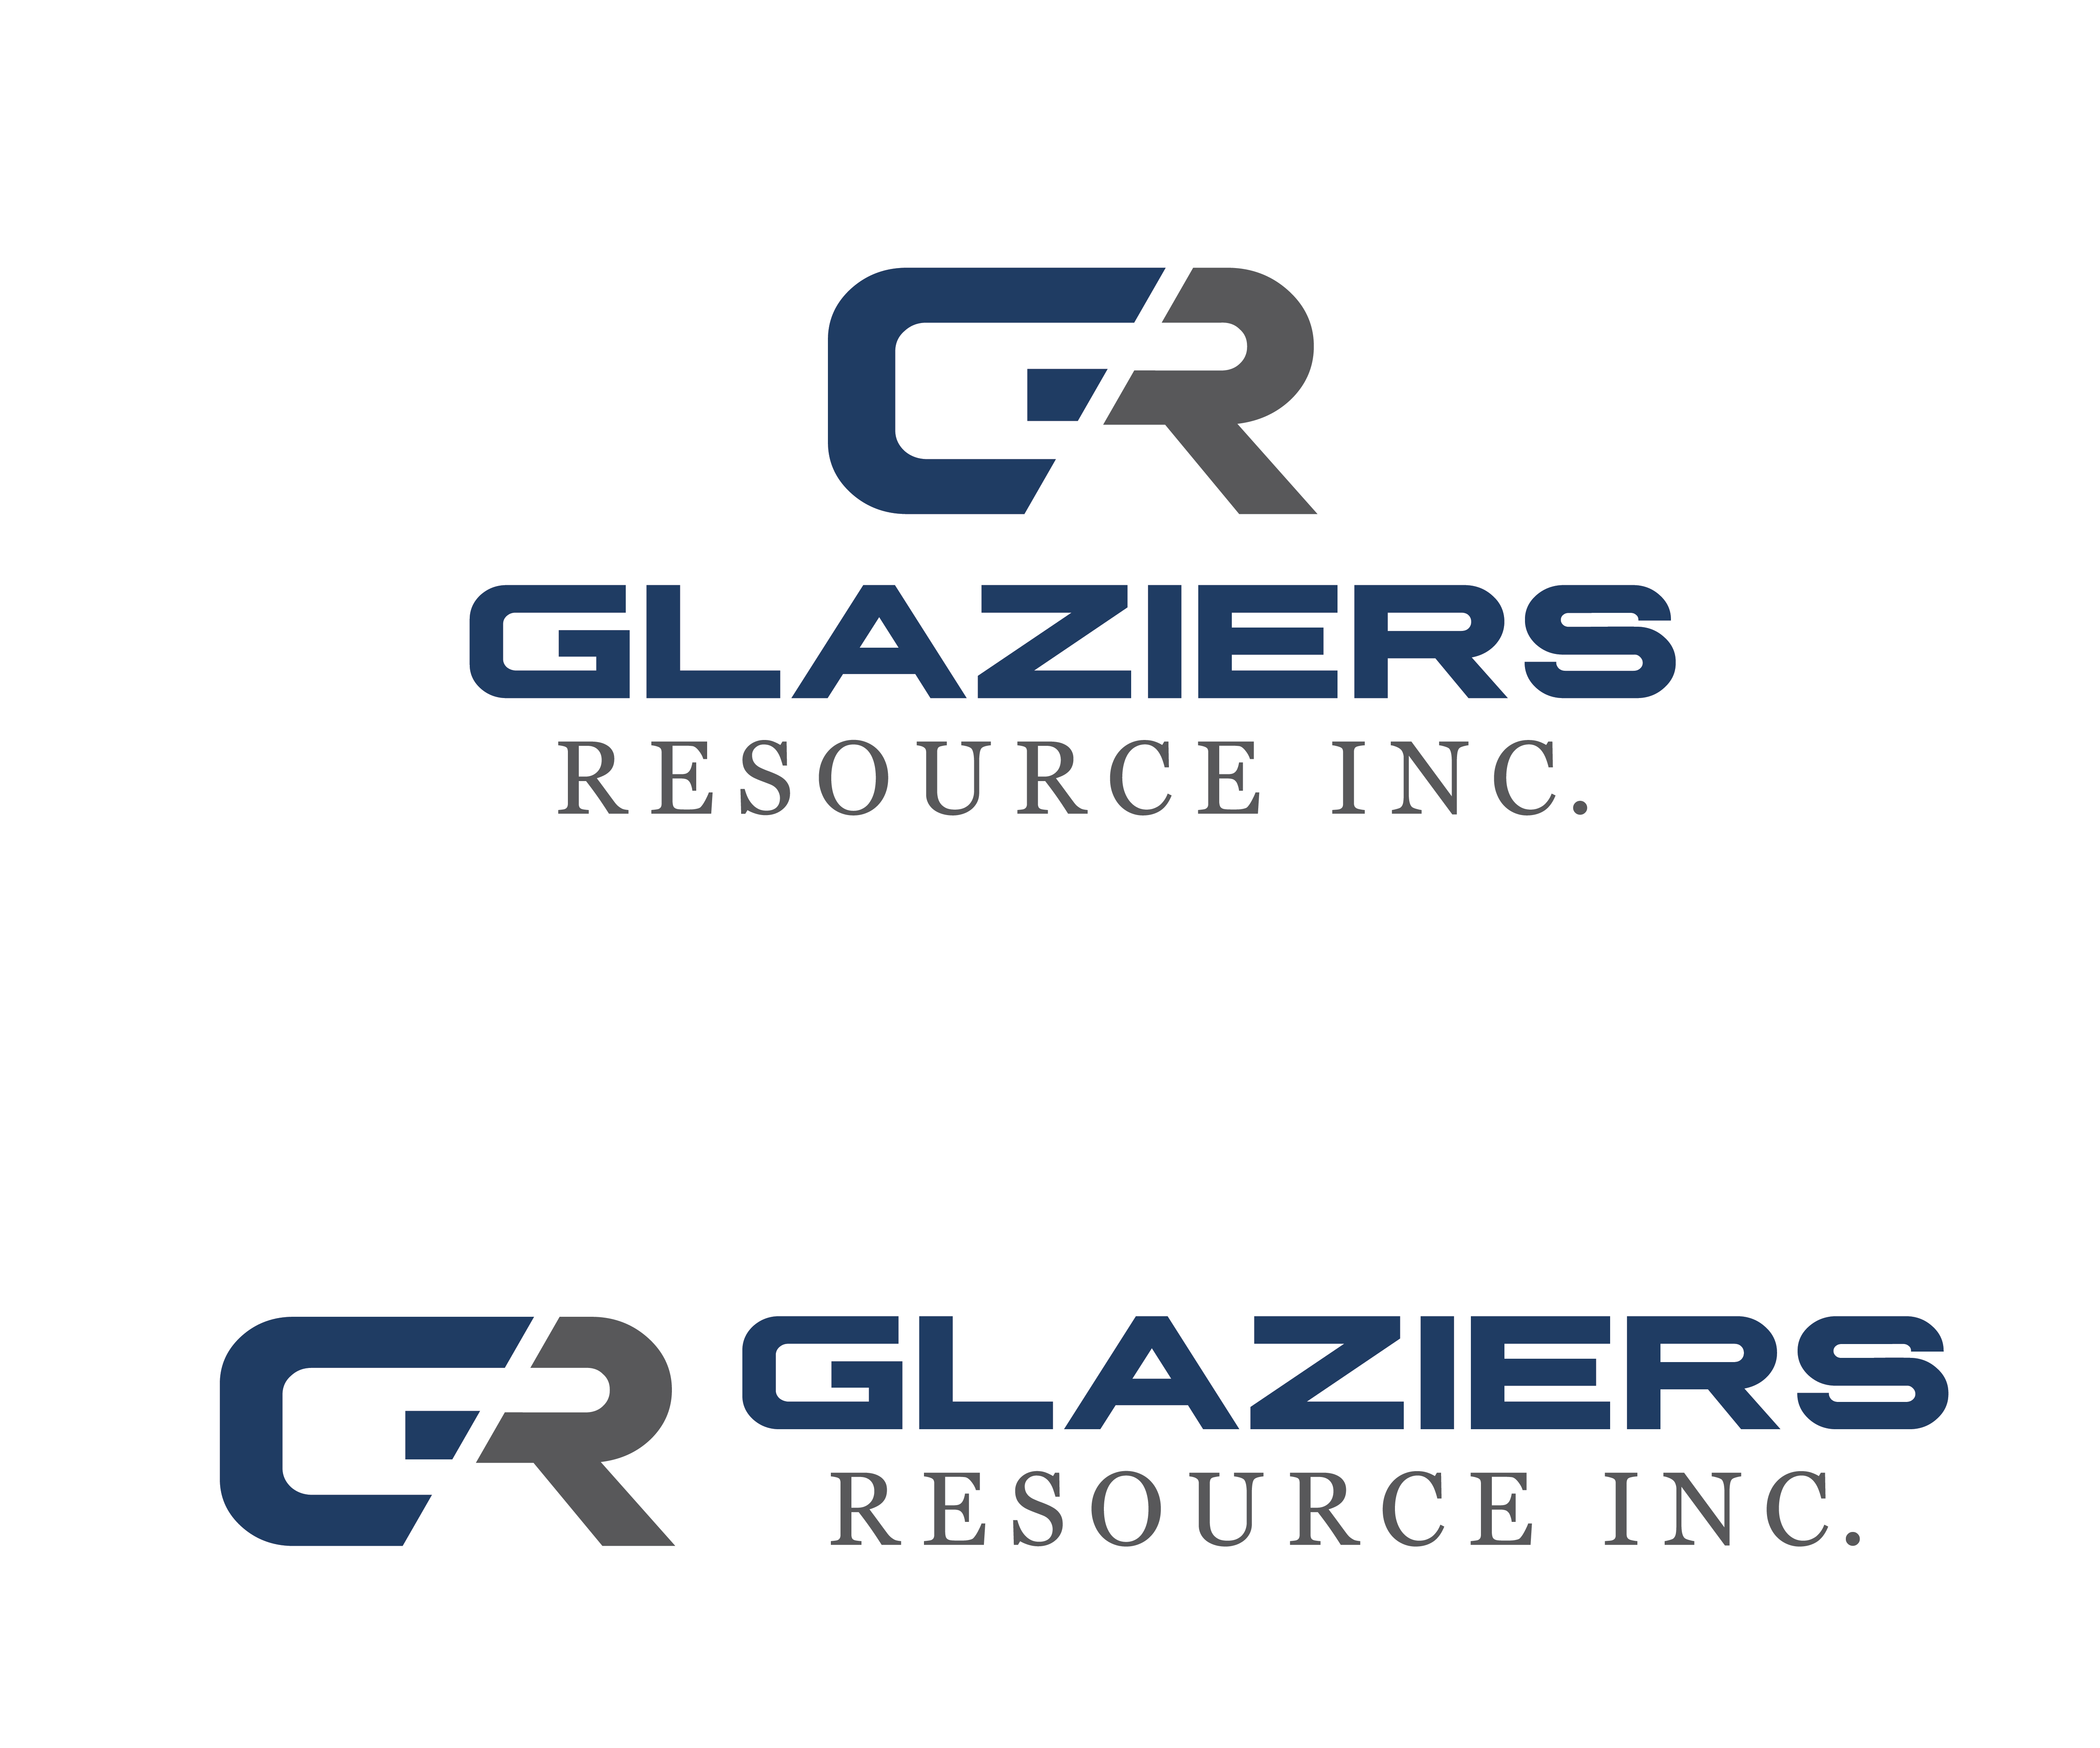 Glaziers Logo - Bold, Serious, Construction Logo Design for Glaziers Resource Inc ...